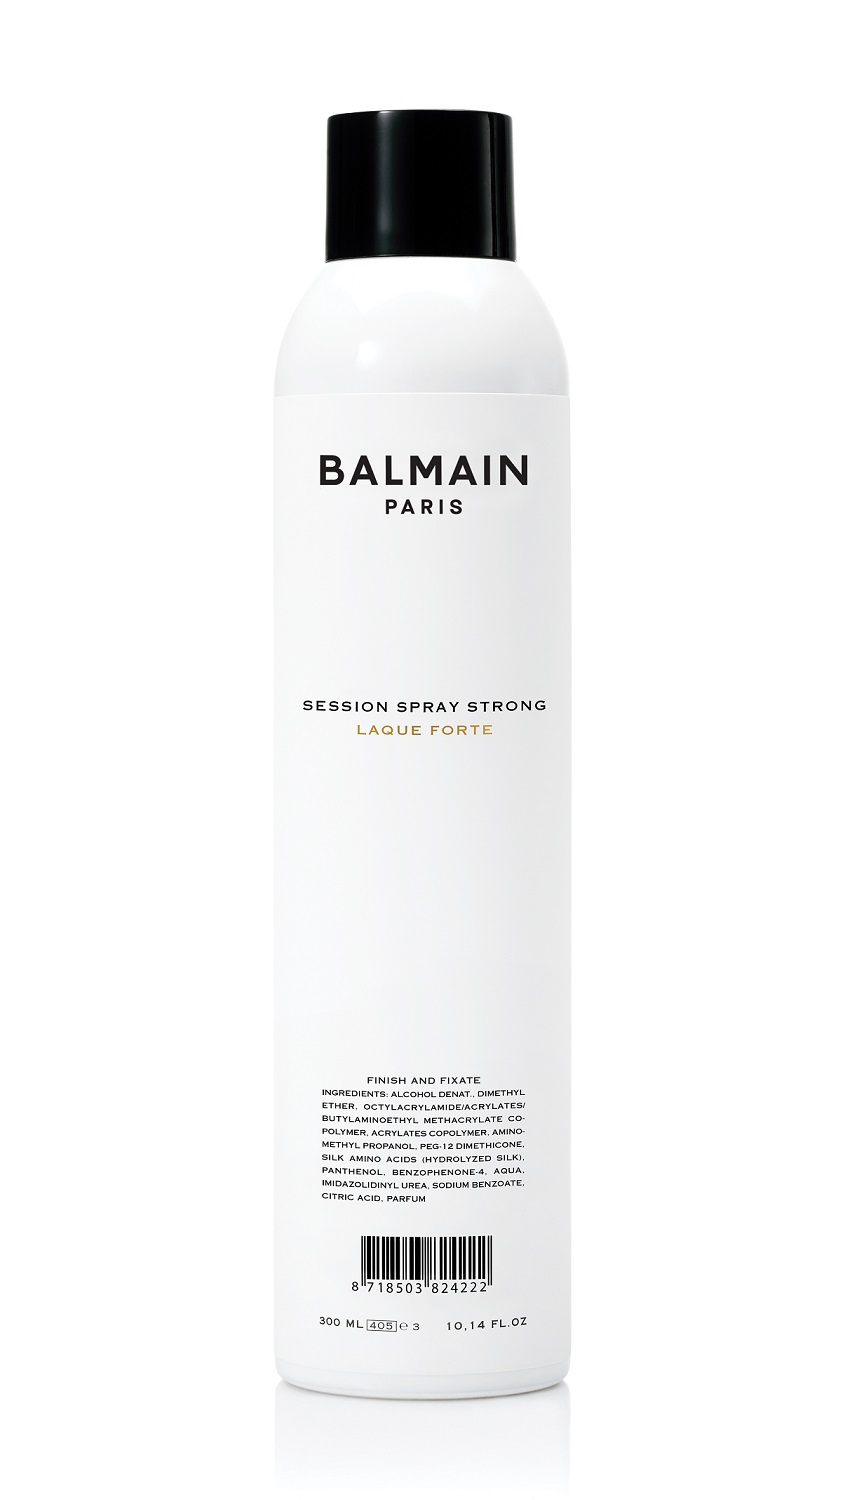 BALMAIN Спрей для укладки волос сильной фиксации Session spray strong, 300 мл (BALMAIN, Стайлинг)